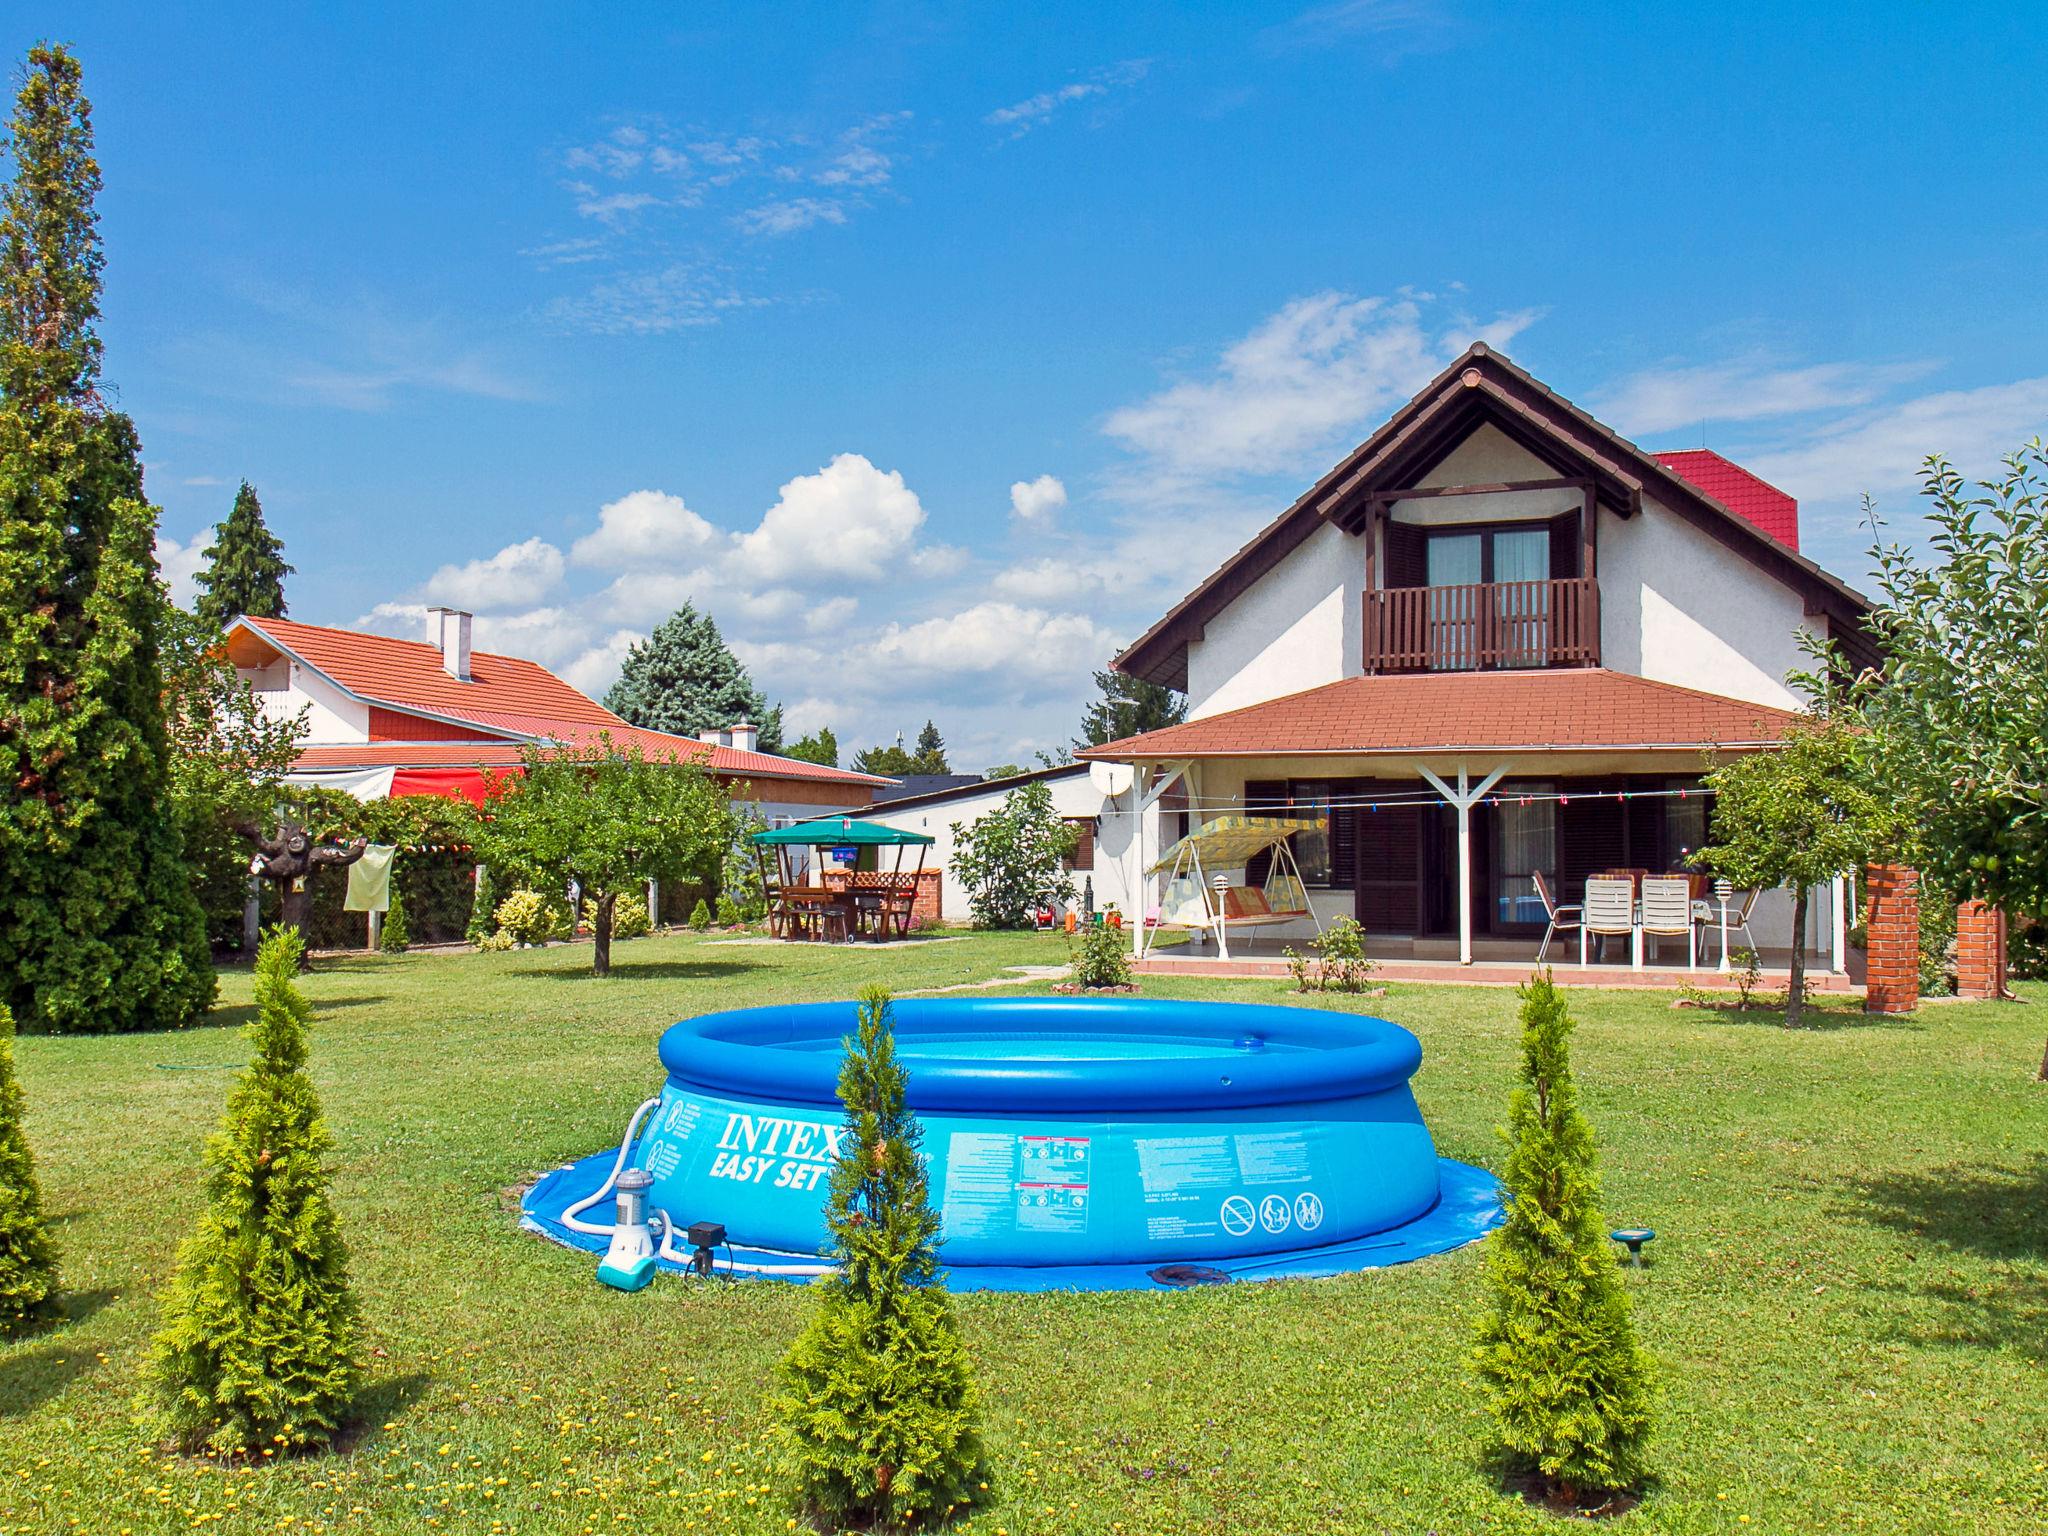 Foto 1 - Casa con 4 camere da letto a Balatonkeresztúr con piscina privata e giardino